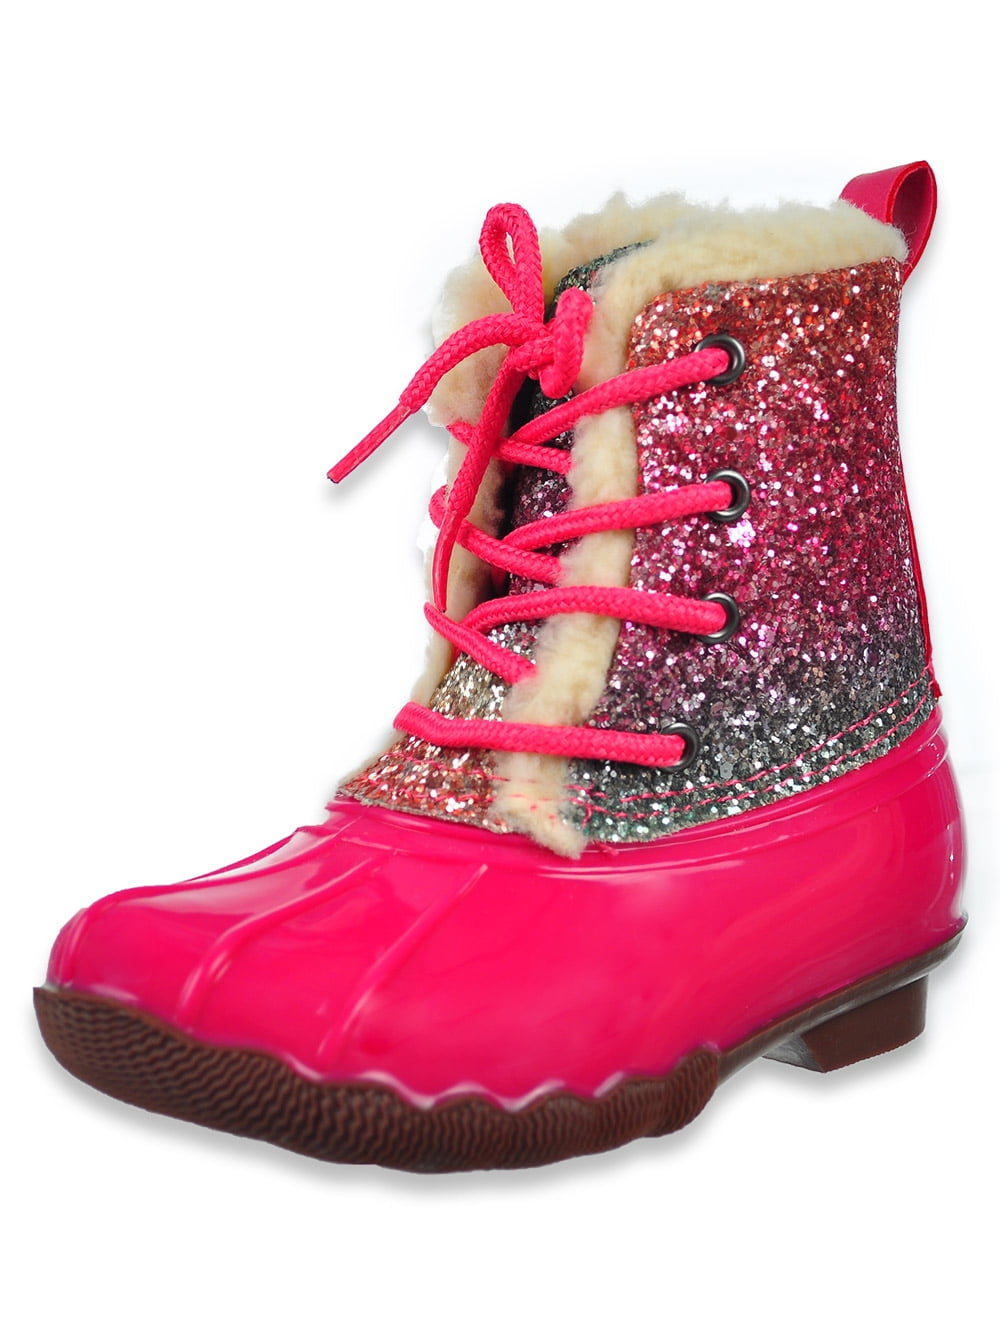 Adrienne Vittadini Girls' Glitter Duck Boots - 2 youth - Walmart.com